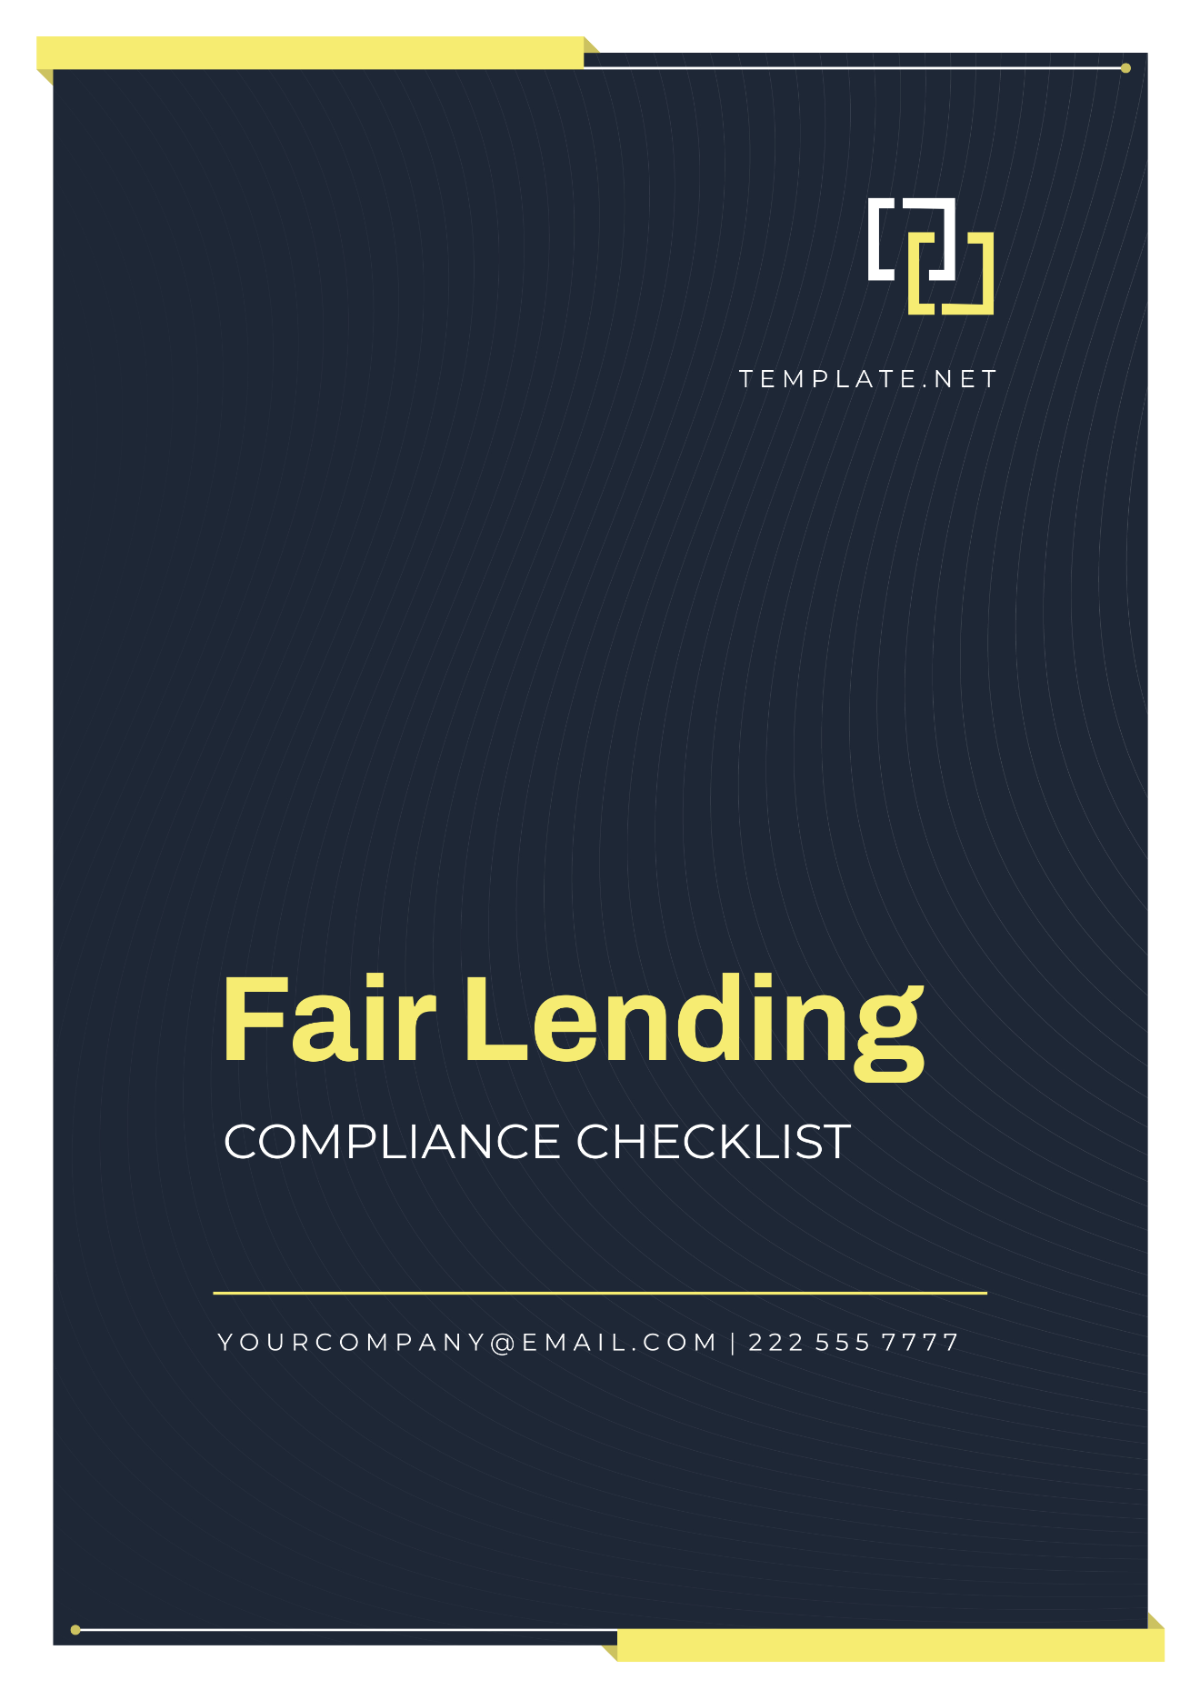 Fair Lending Compliance Checklist Template